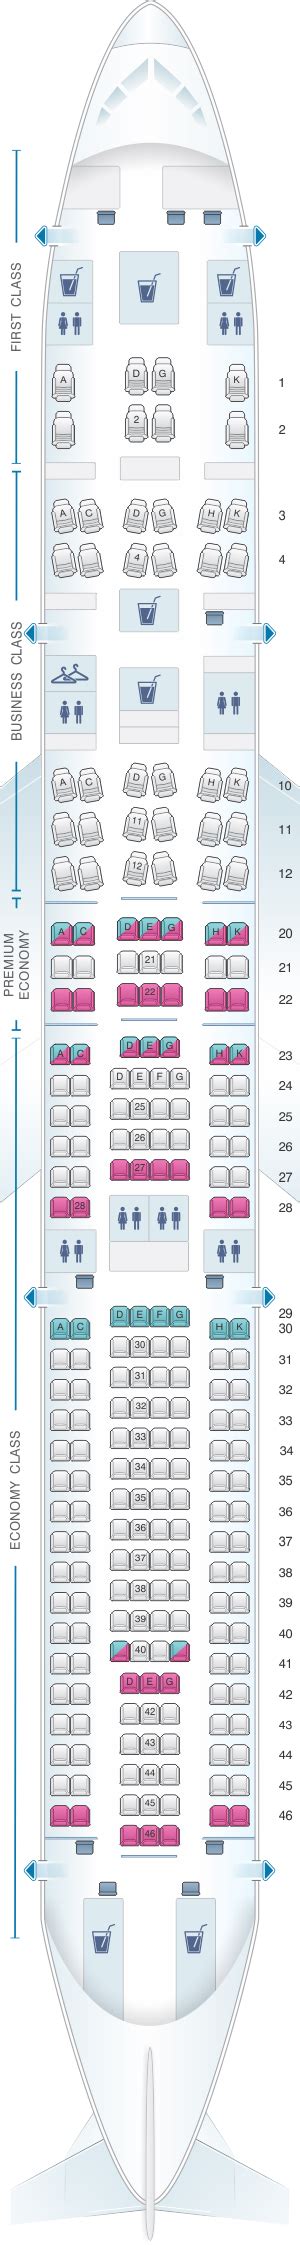 Airbus A330 300 Seat Plan Lufthansa My Bios